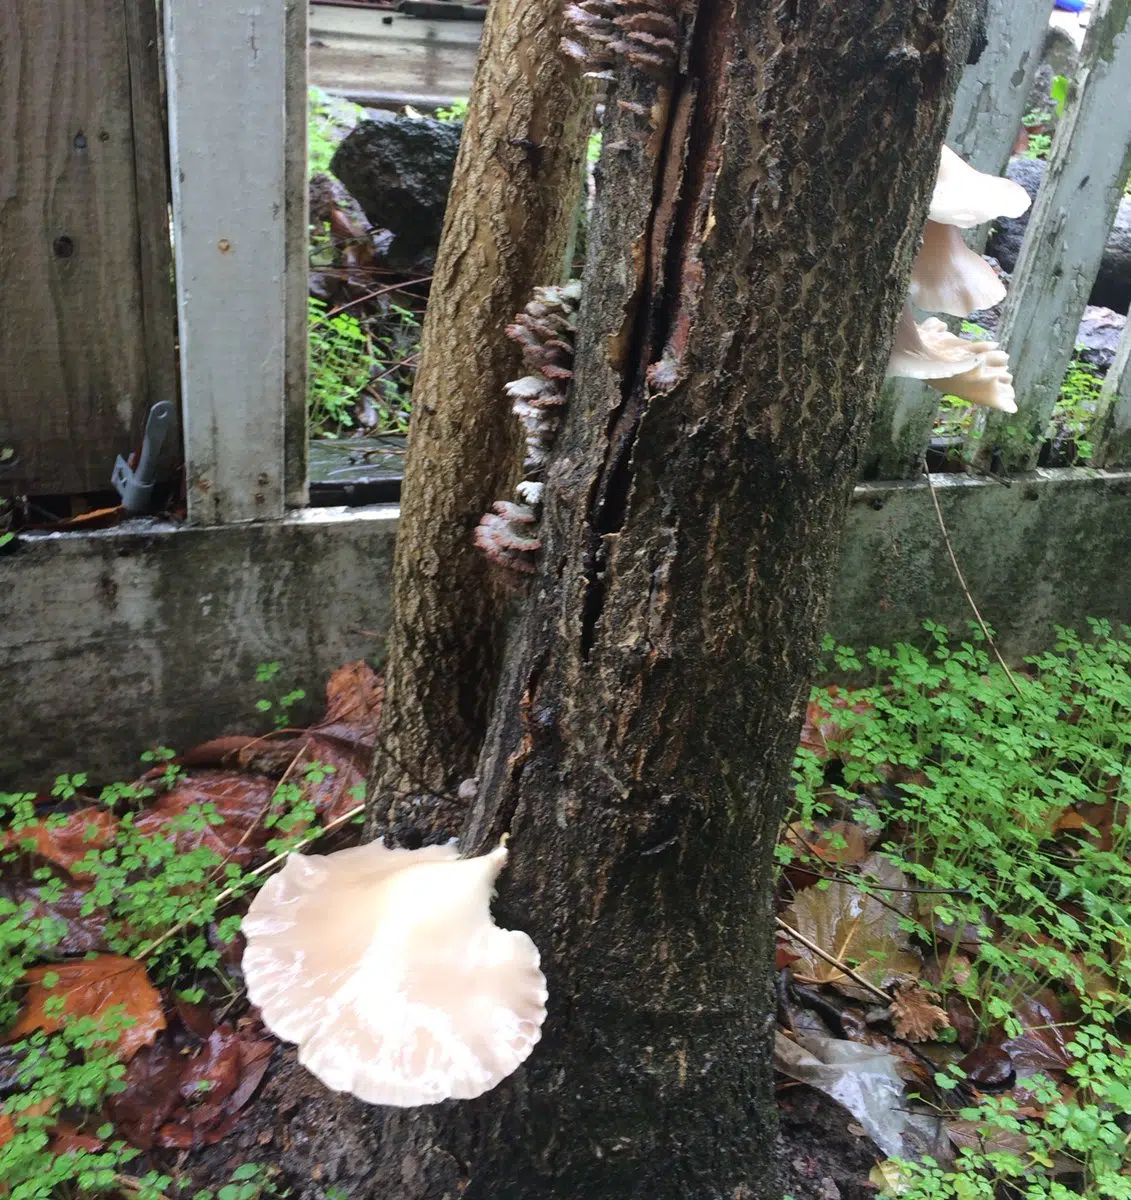 Fungi And Mushrooms Start Sprouting At The Tree’s Base